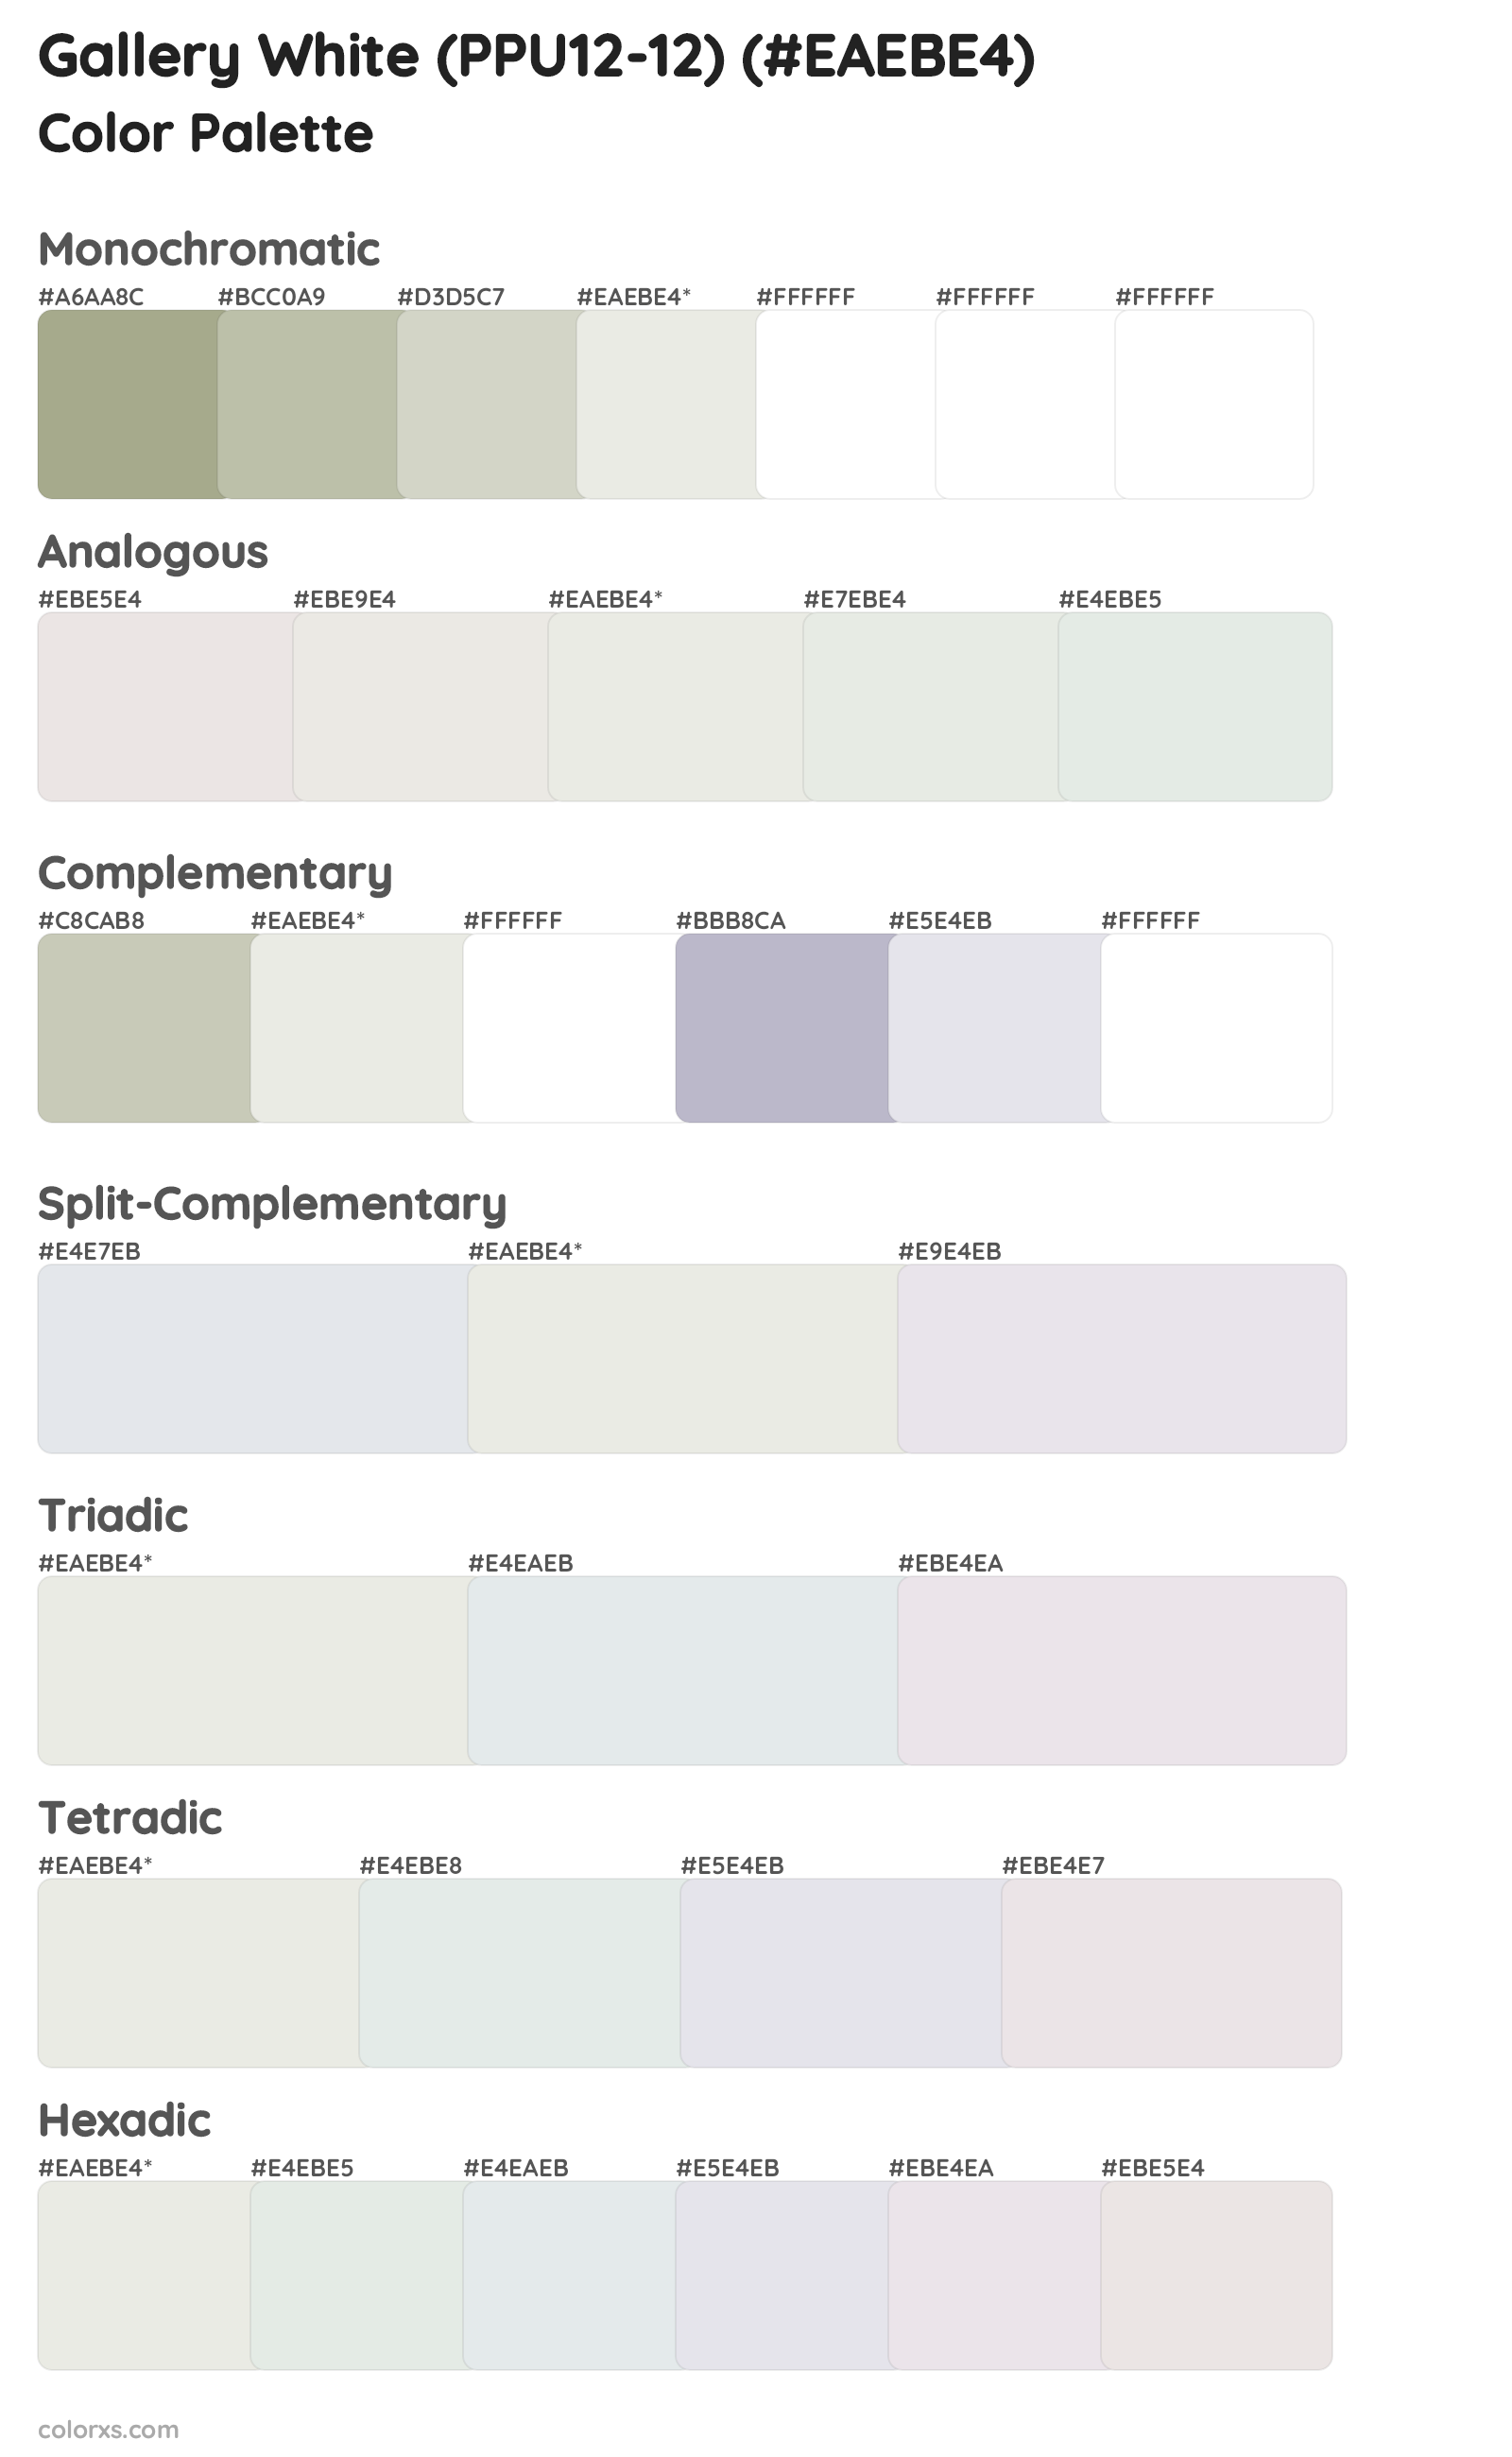 Gallery White (PPU12-12) Color Scheme Palettes